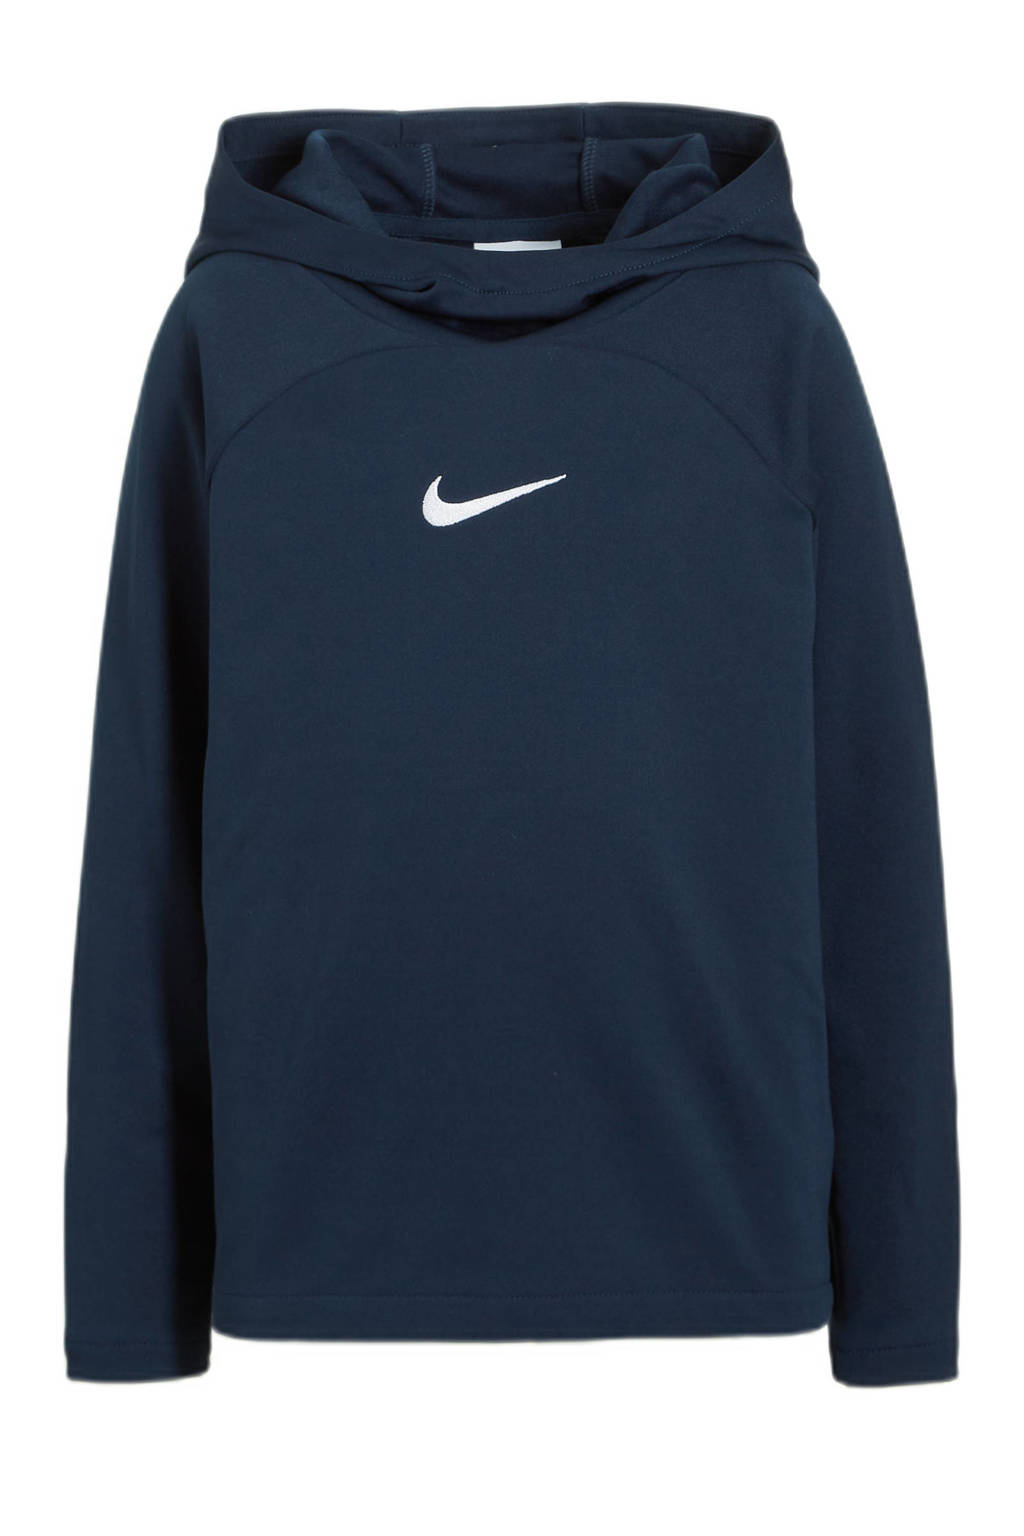 Donkerblauwe jongens en meisjes Nike sporthoodie van polyester met logo dessin, lange mouwen en capuchon